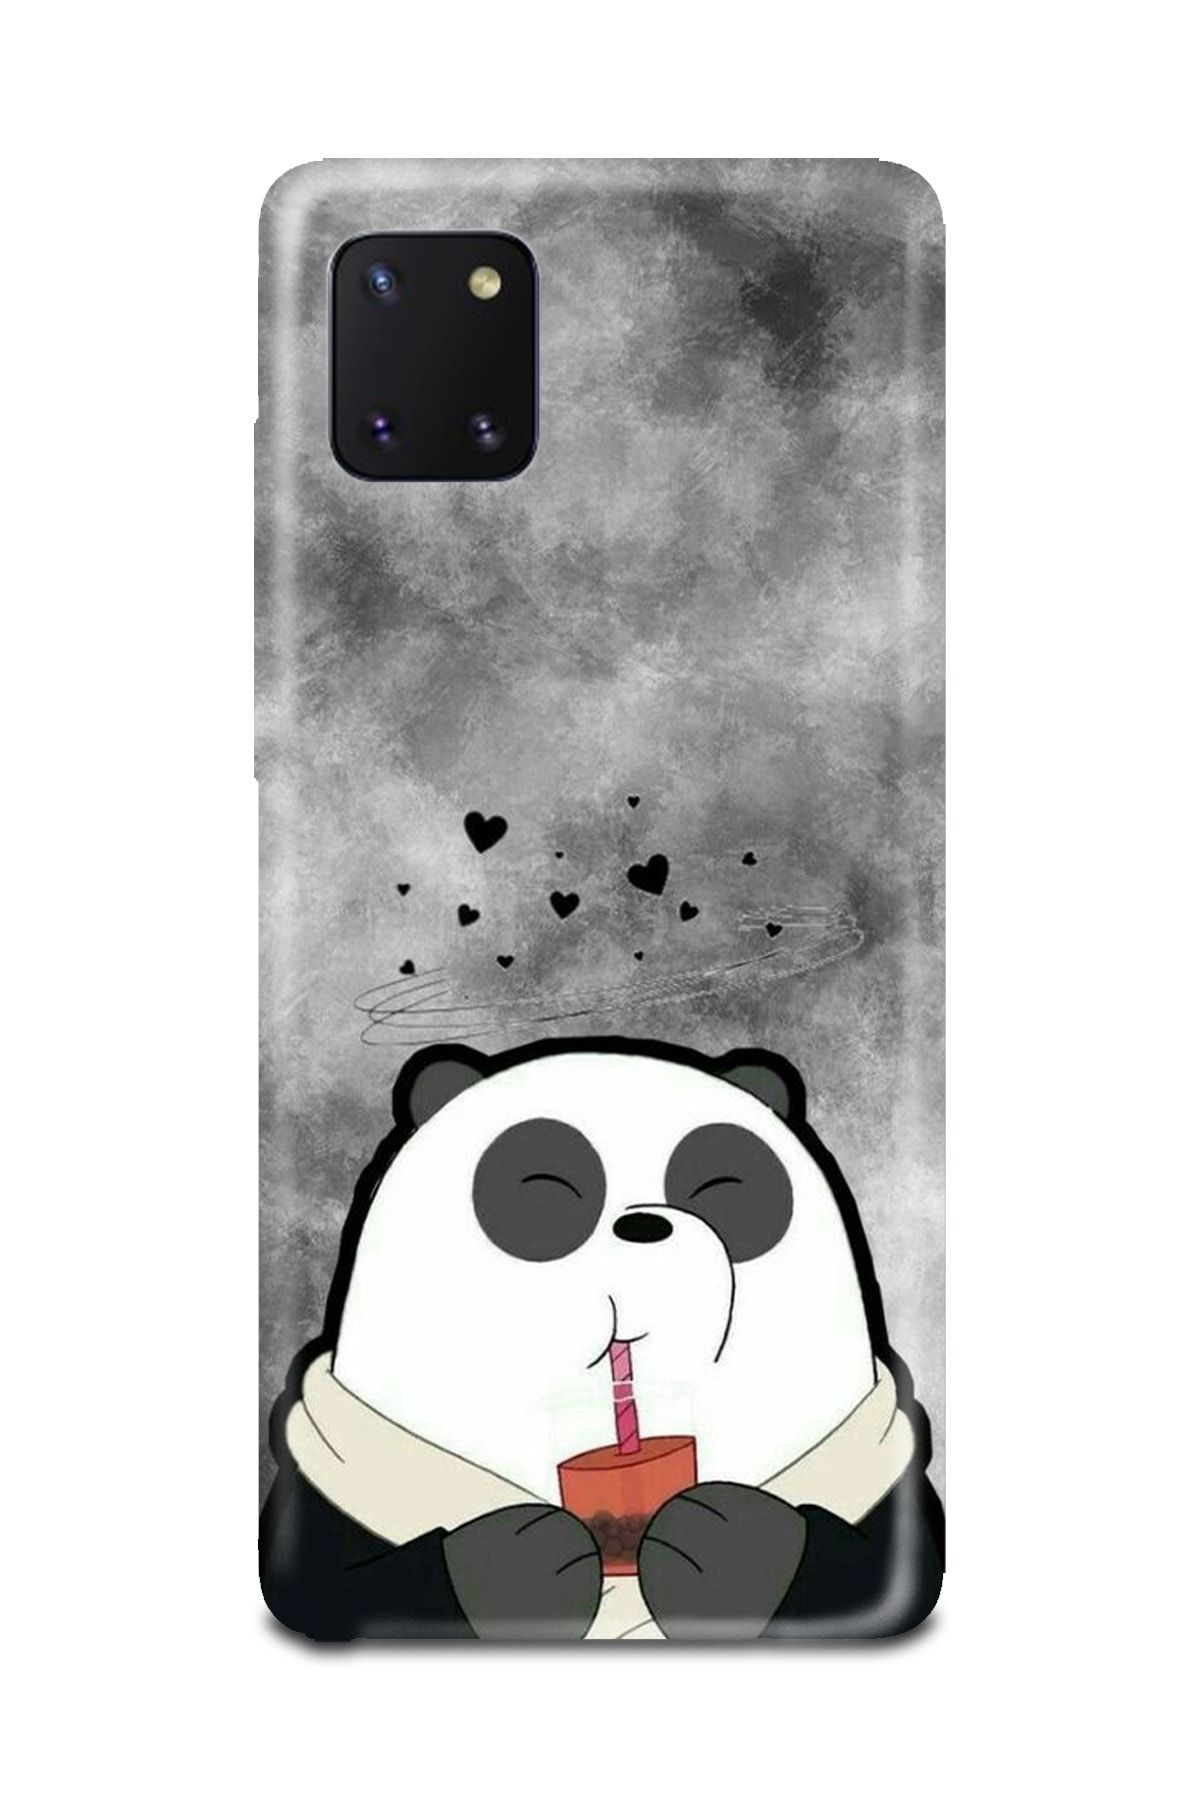 PERAX Samsung Galaxy Note 10 Lite Panda Desenli Telefon Kılıfı Not1001-01